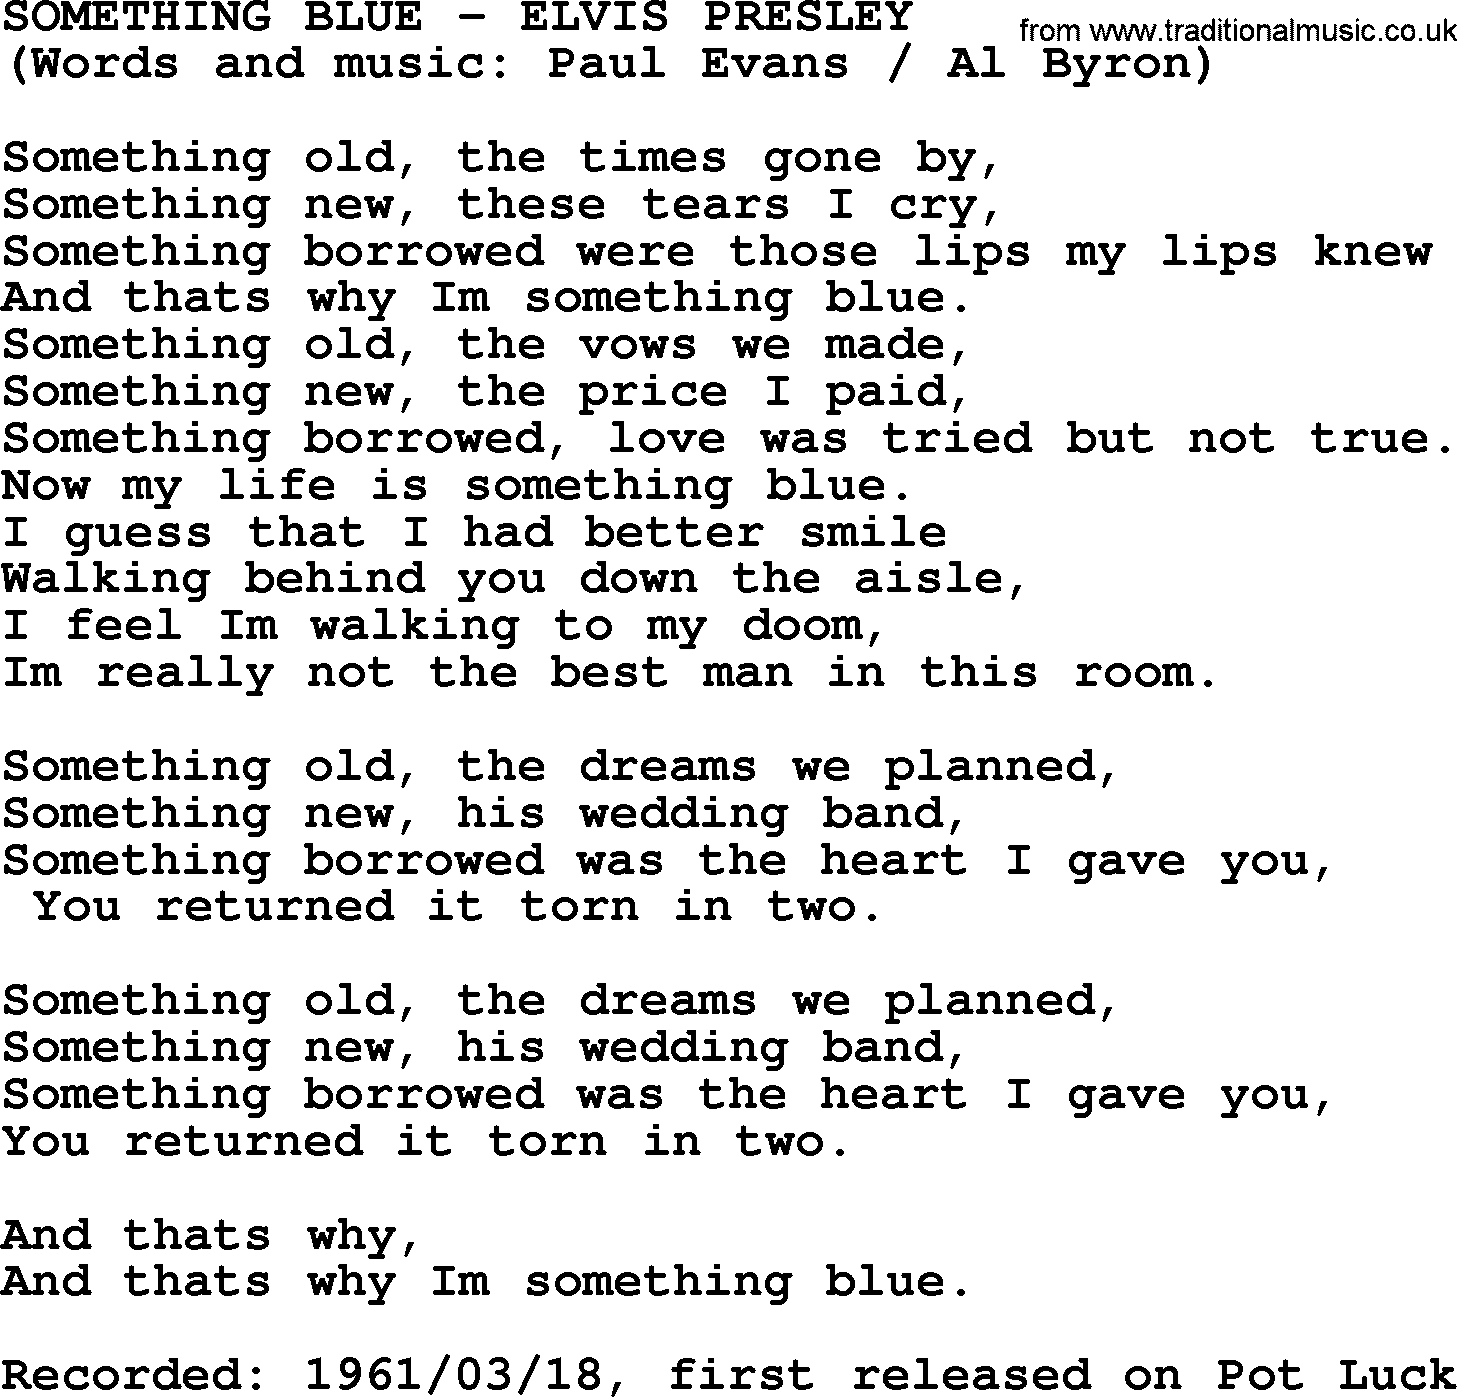 Elvis Presley song: Something Blue lyrics